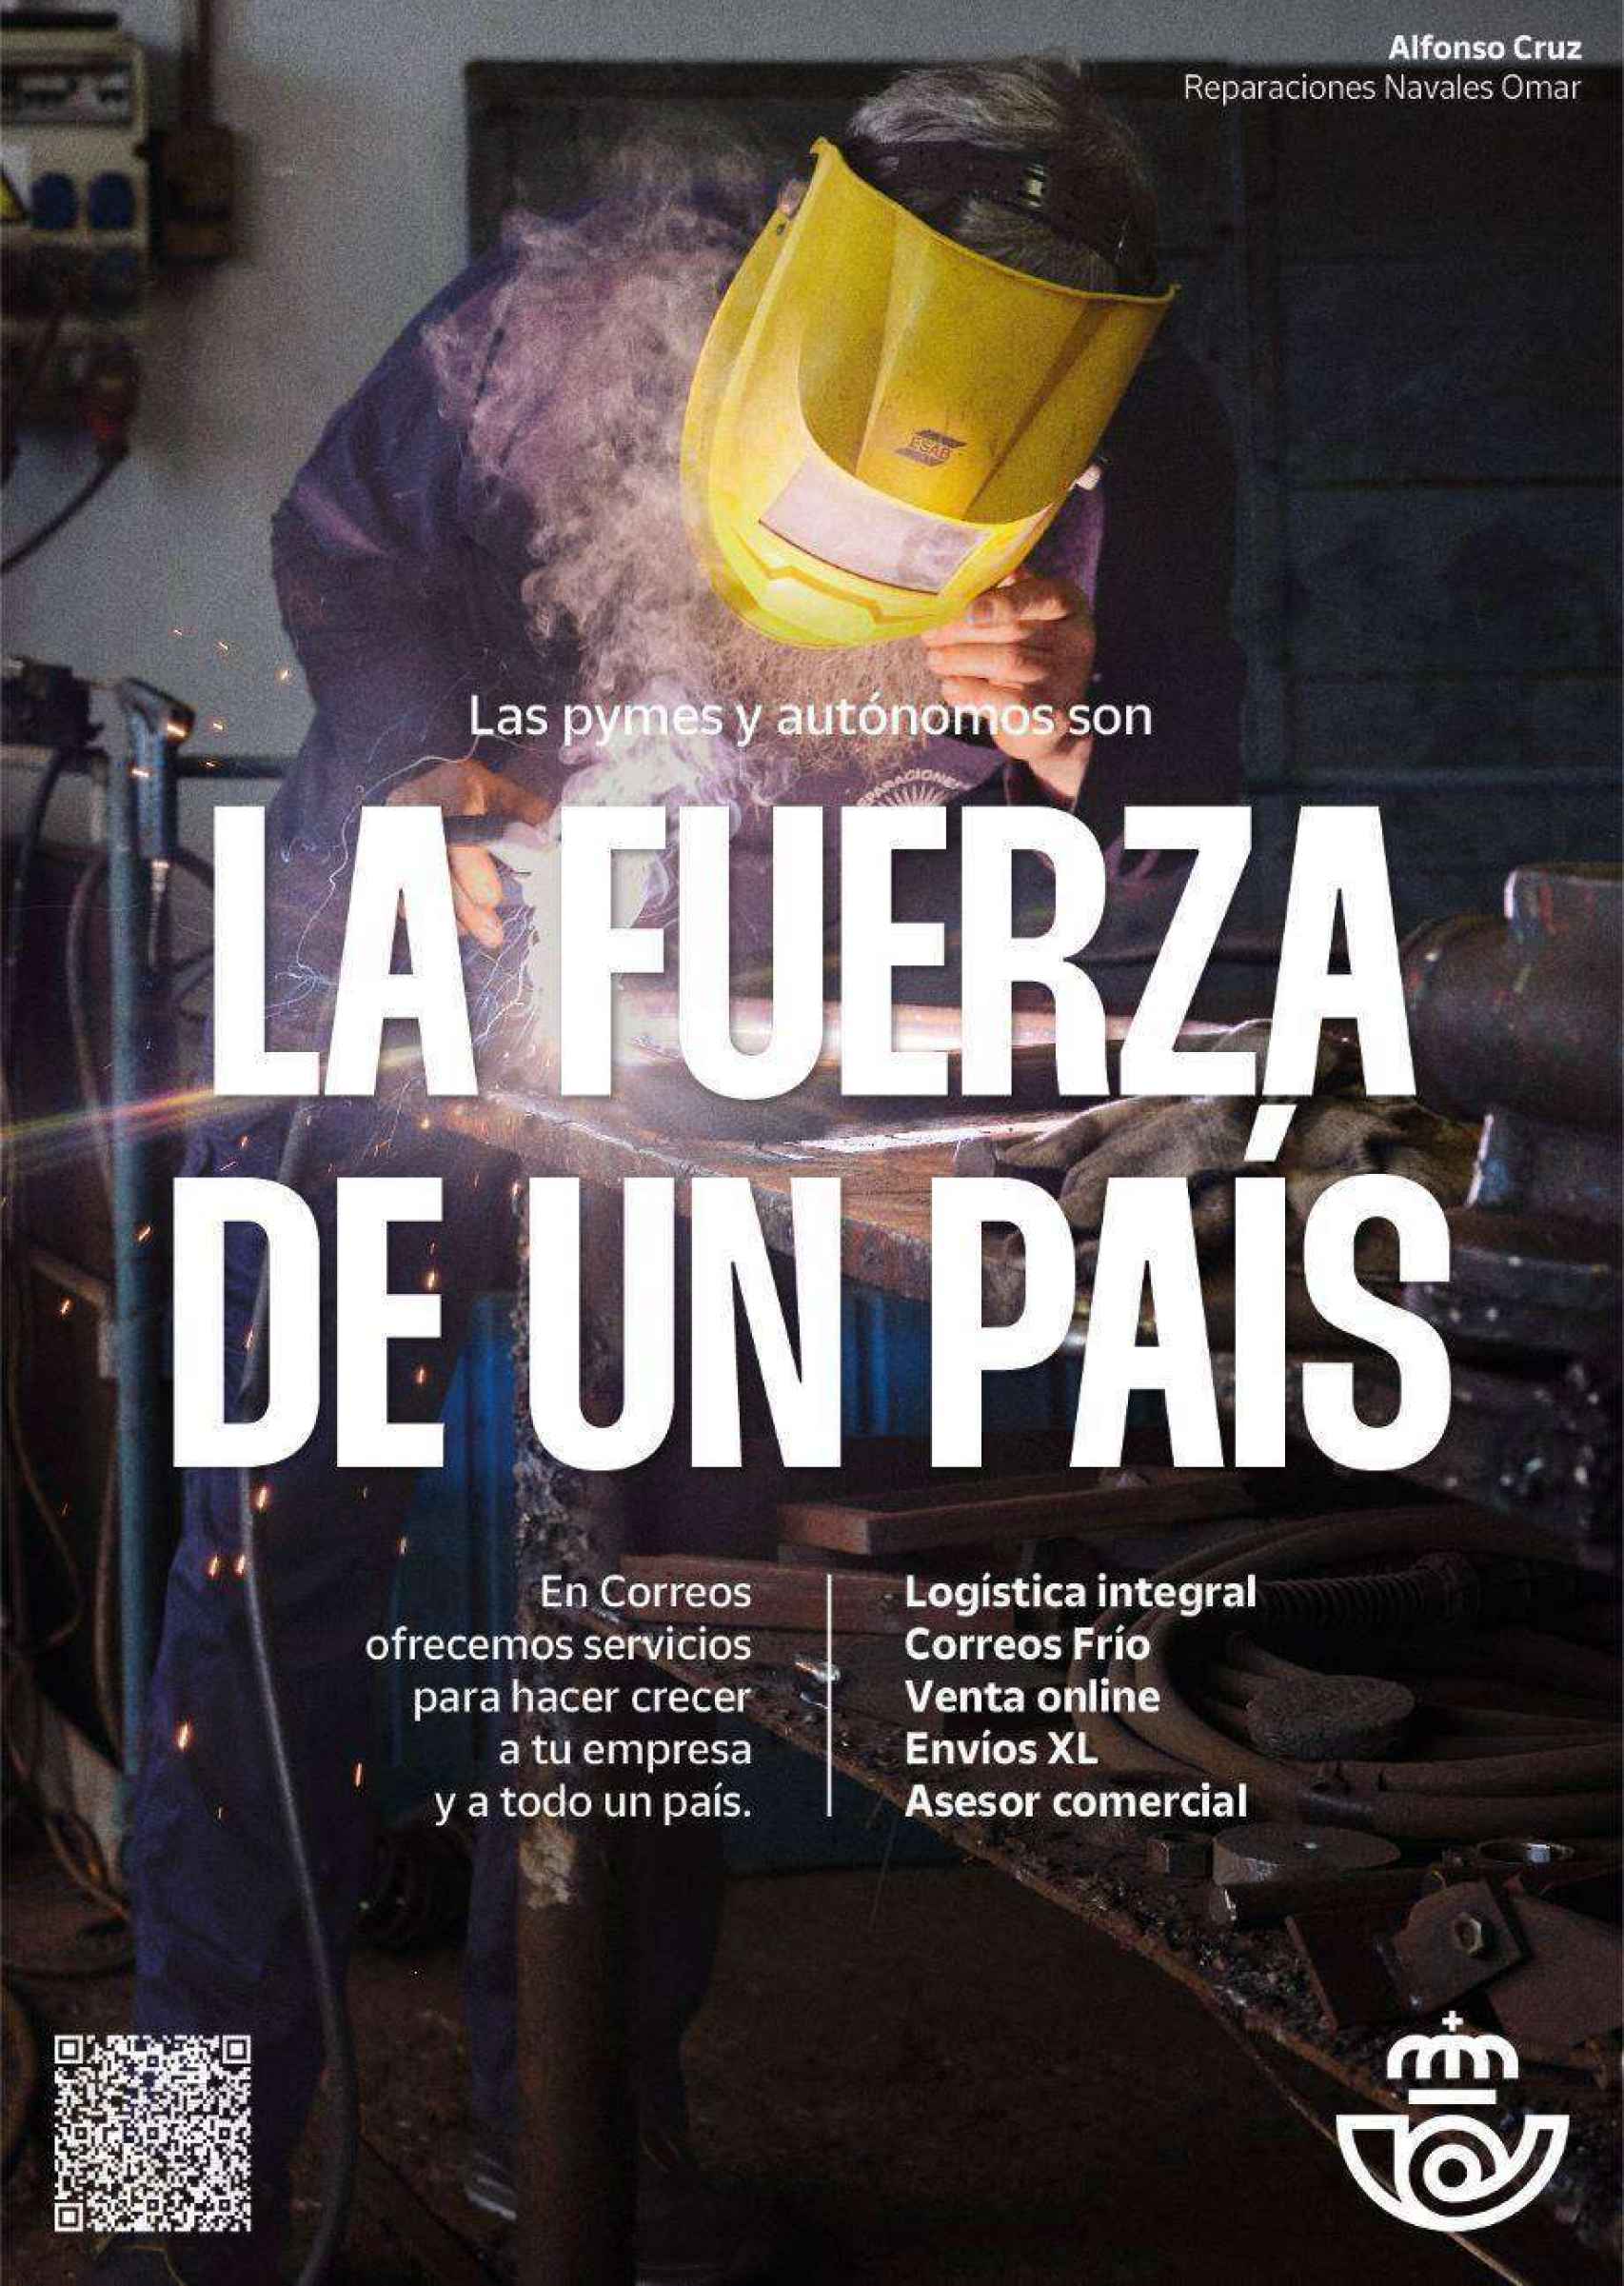 Cartel de la campaña 'LaFuerzaDeUnPaís'.